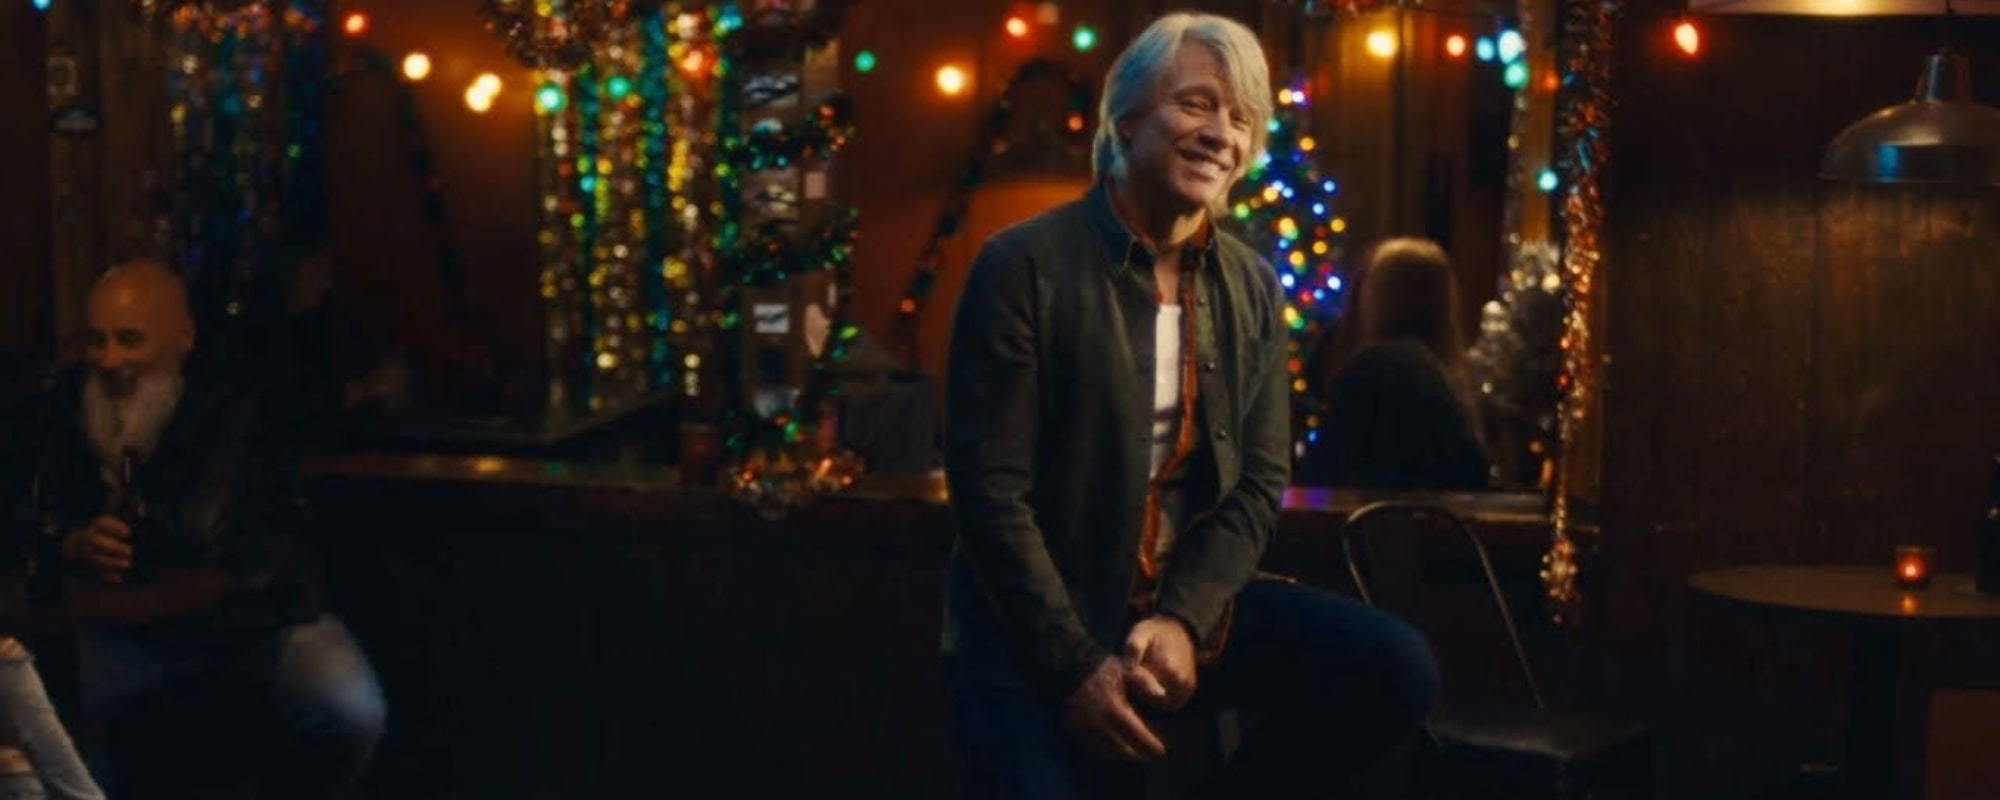 Bon Jovi Captures the Festive Feeling of “Christmas Isn’t Christmas” with New Music Video